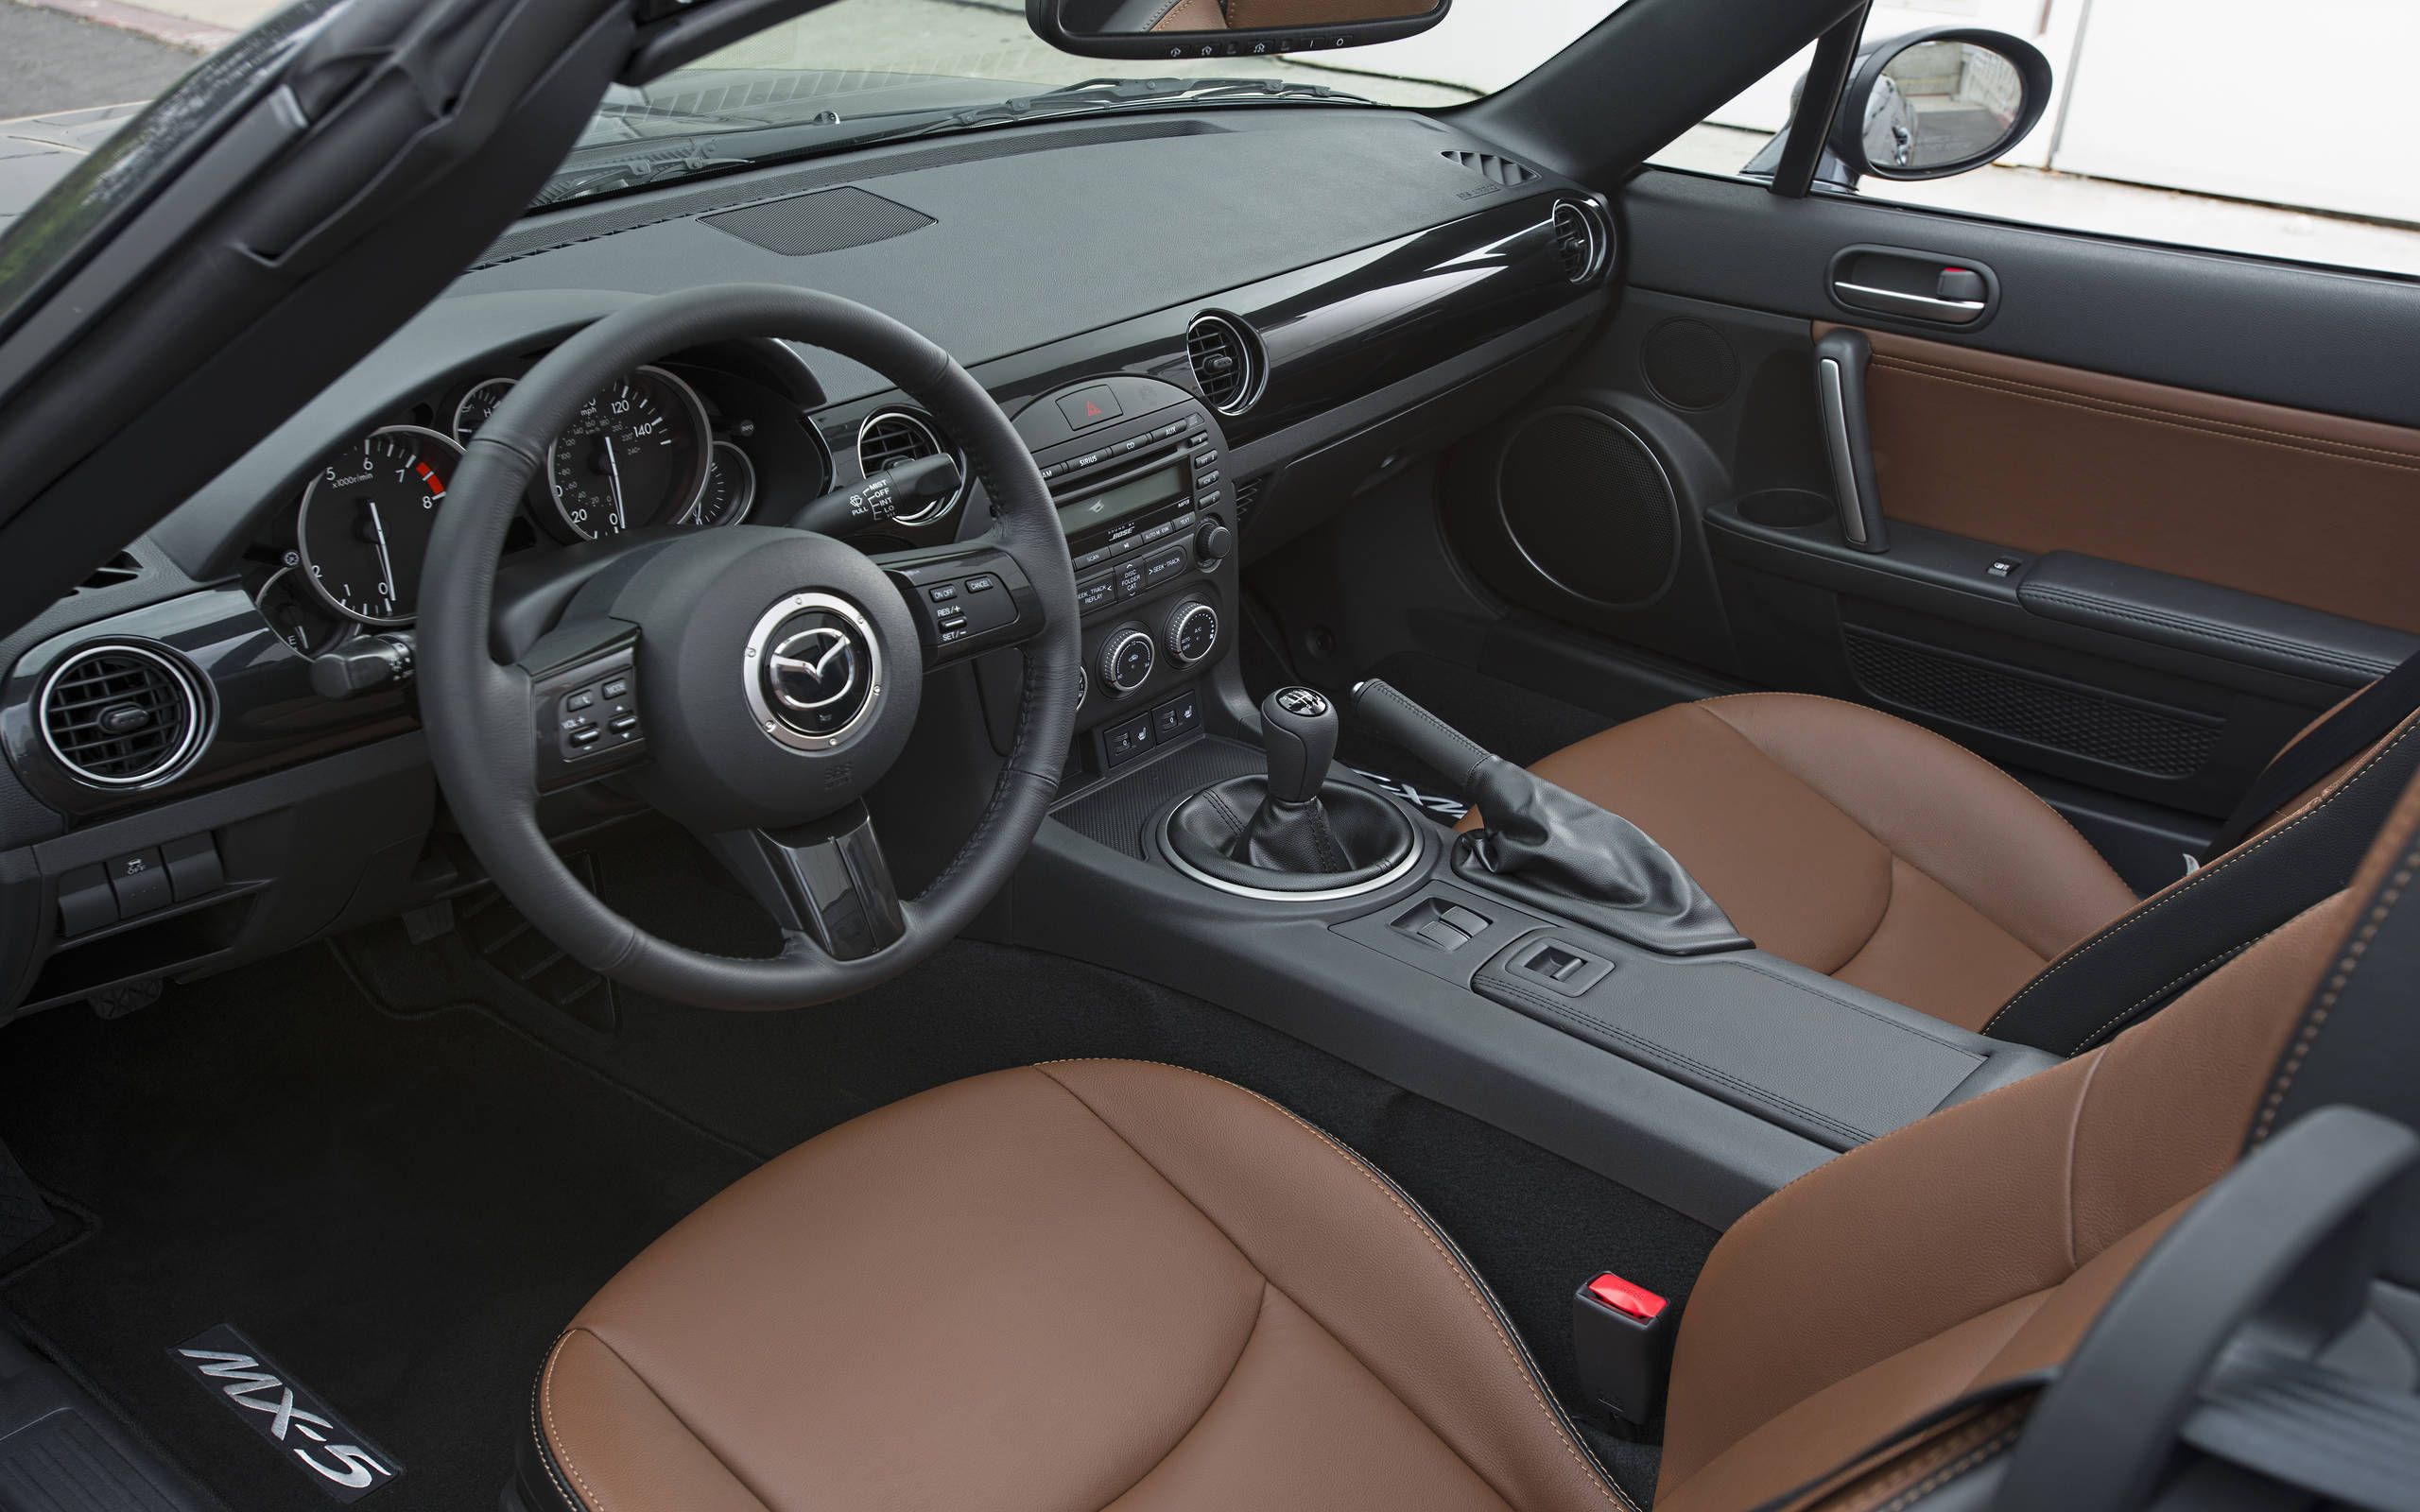 2014 Mazda MX-5 Miata Grand Touring PRHT review notes